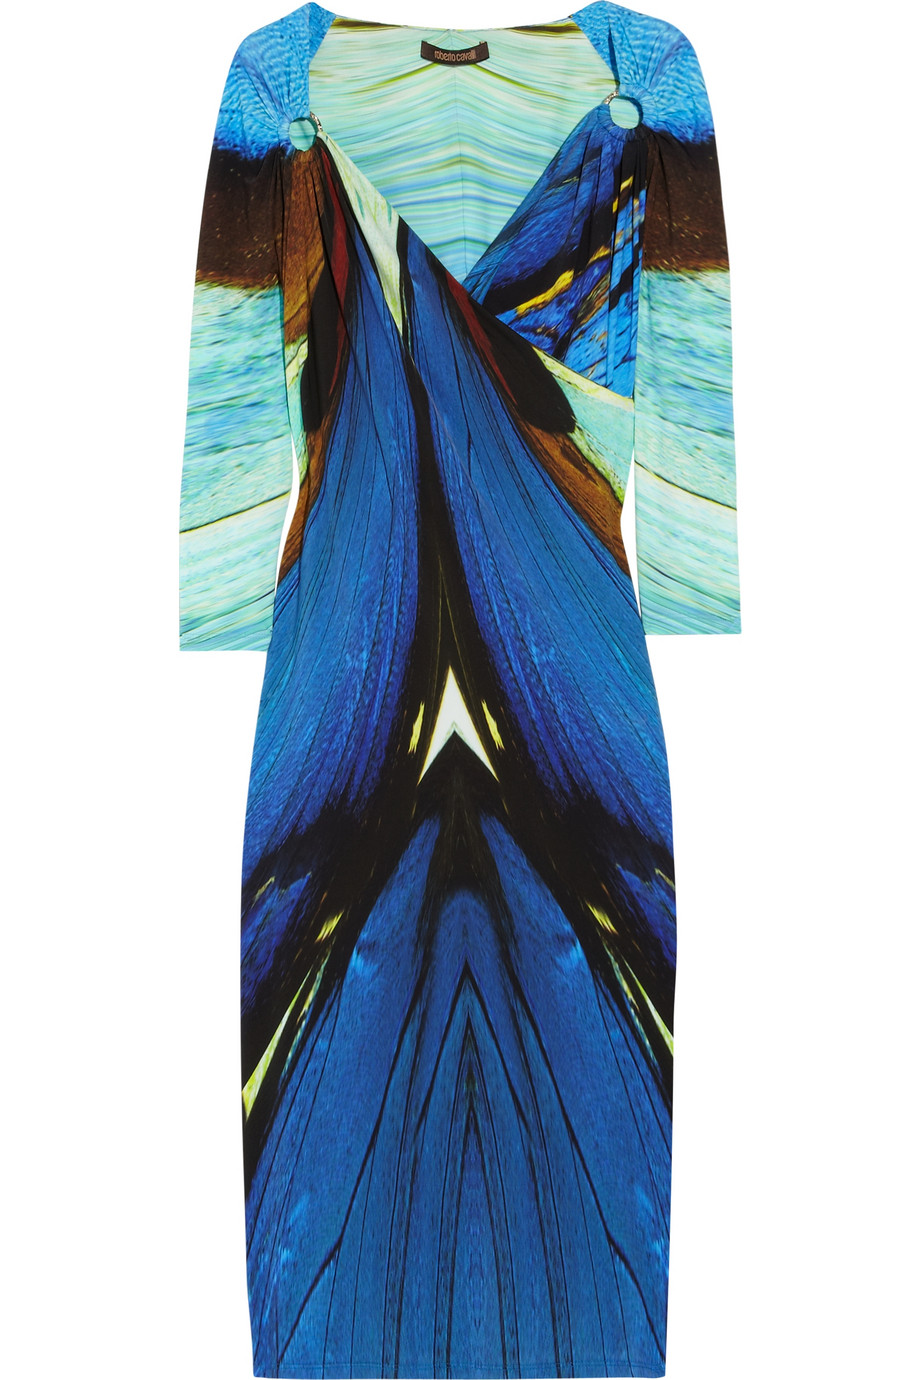 Lyst - Roberto cavalli Printed Stretchjersey Dress in Blue